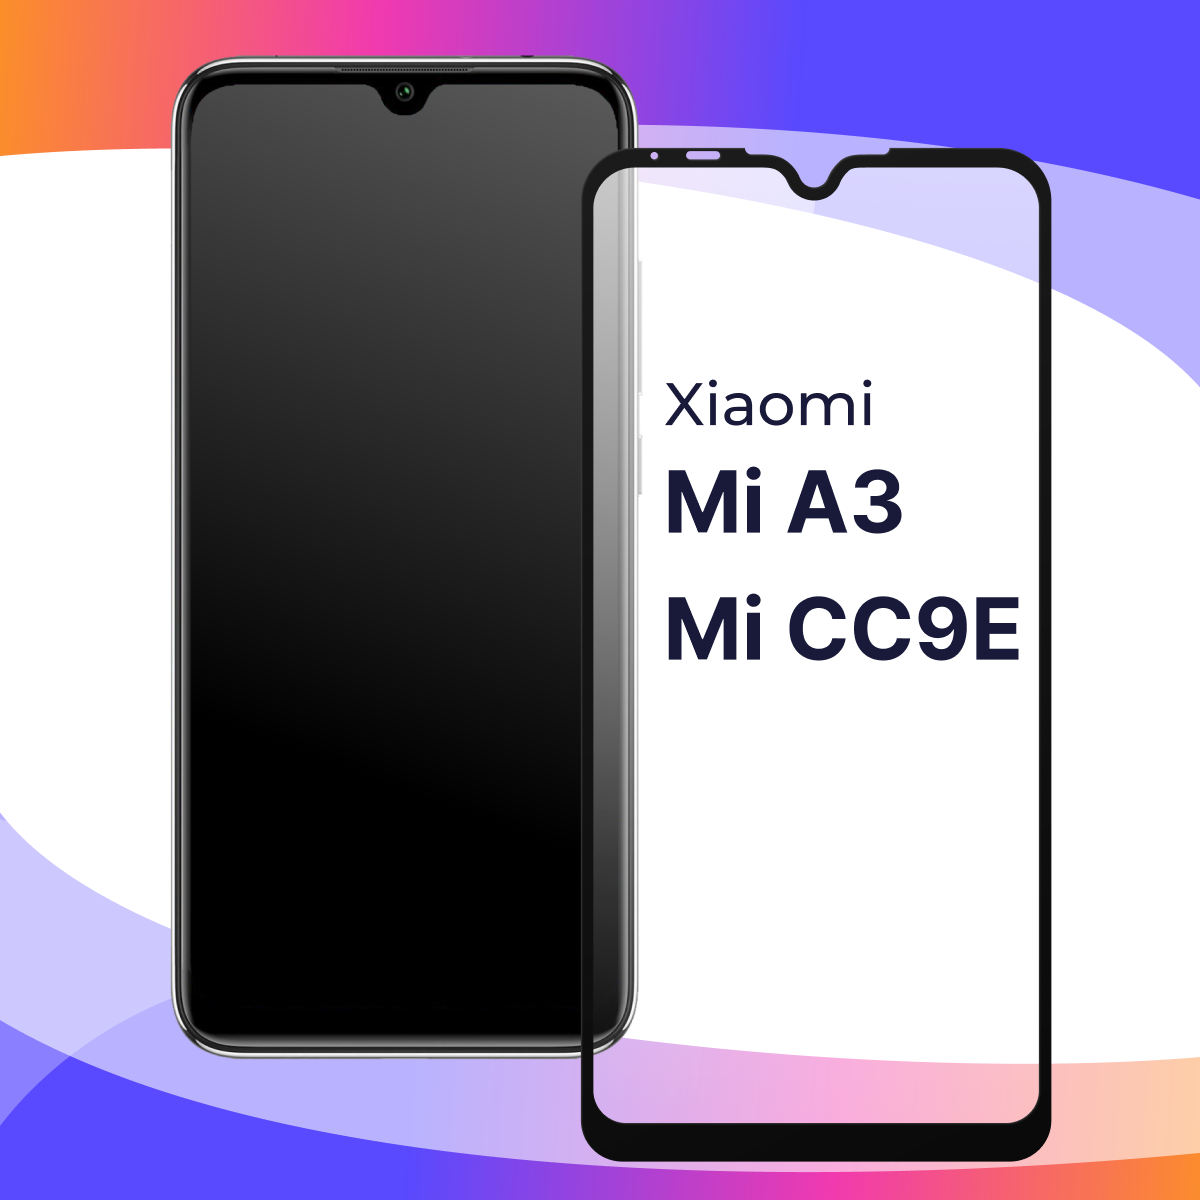 Комплект 2 шт. Защитное стекло для телефона Xiaomi Mi A3 и Xiaomi Mi CC9E / Глянцевое противоударное стекло на смартфон Сяоми Ми А3 и Ми СС9Е